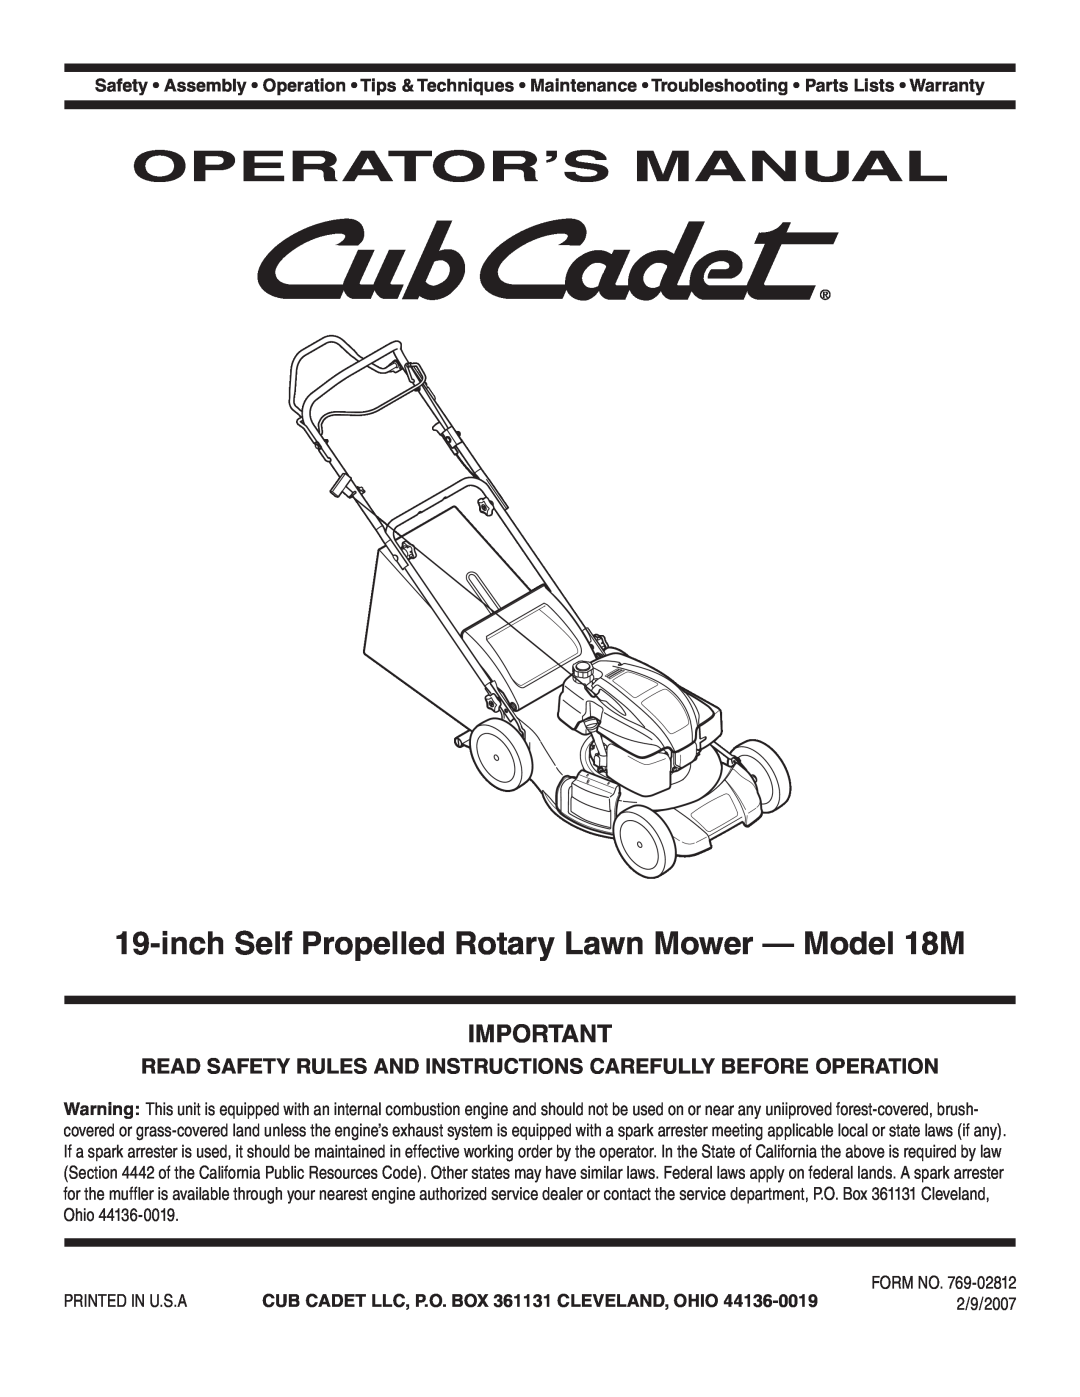 Cub Cadet warranty Operator’S Manual, inch Self Propelled Rotary Lawn Mower - Model 18M 